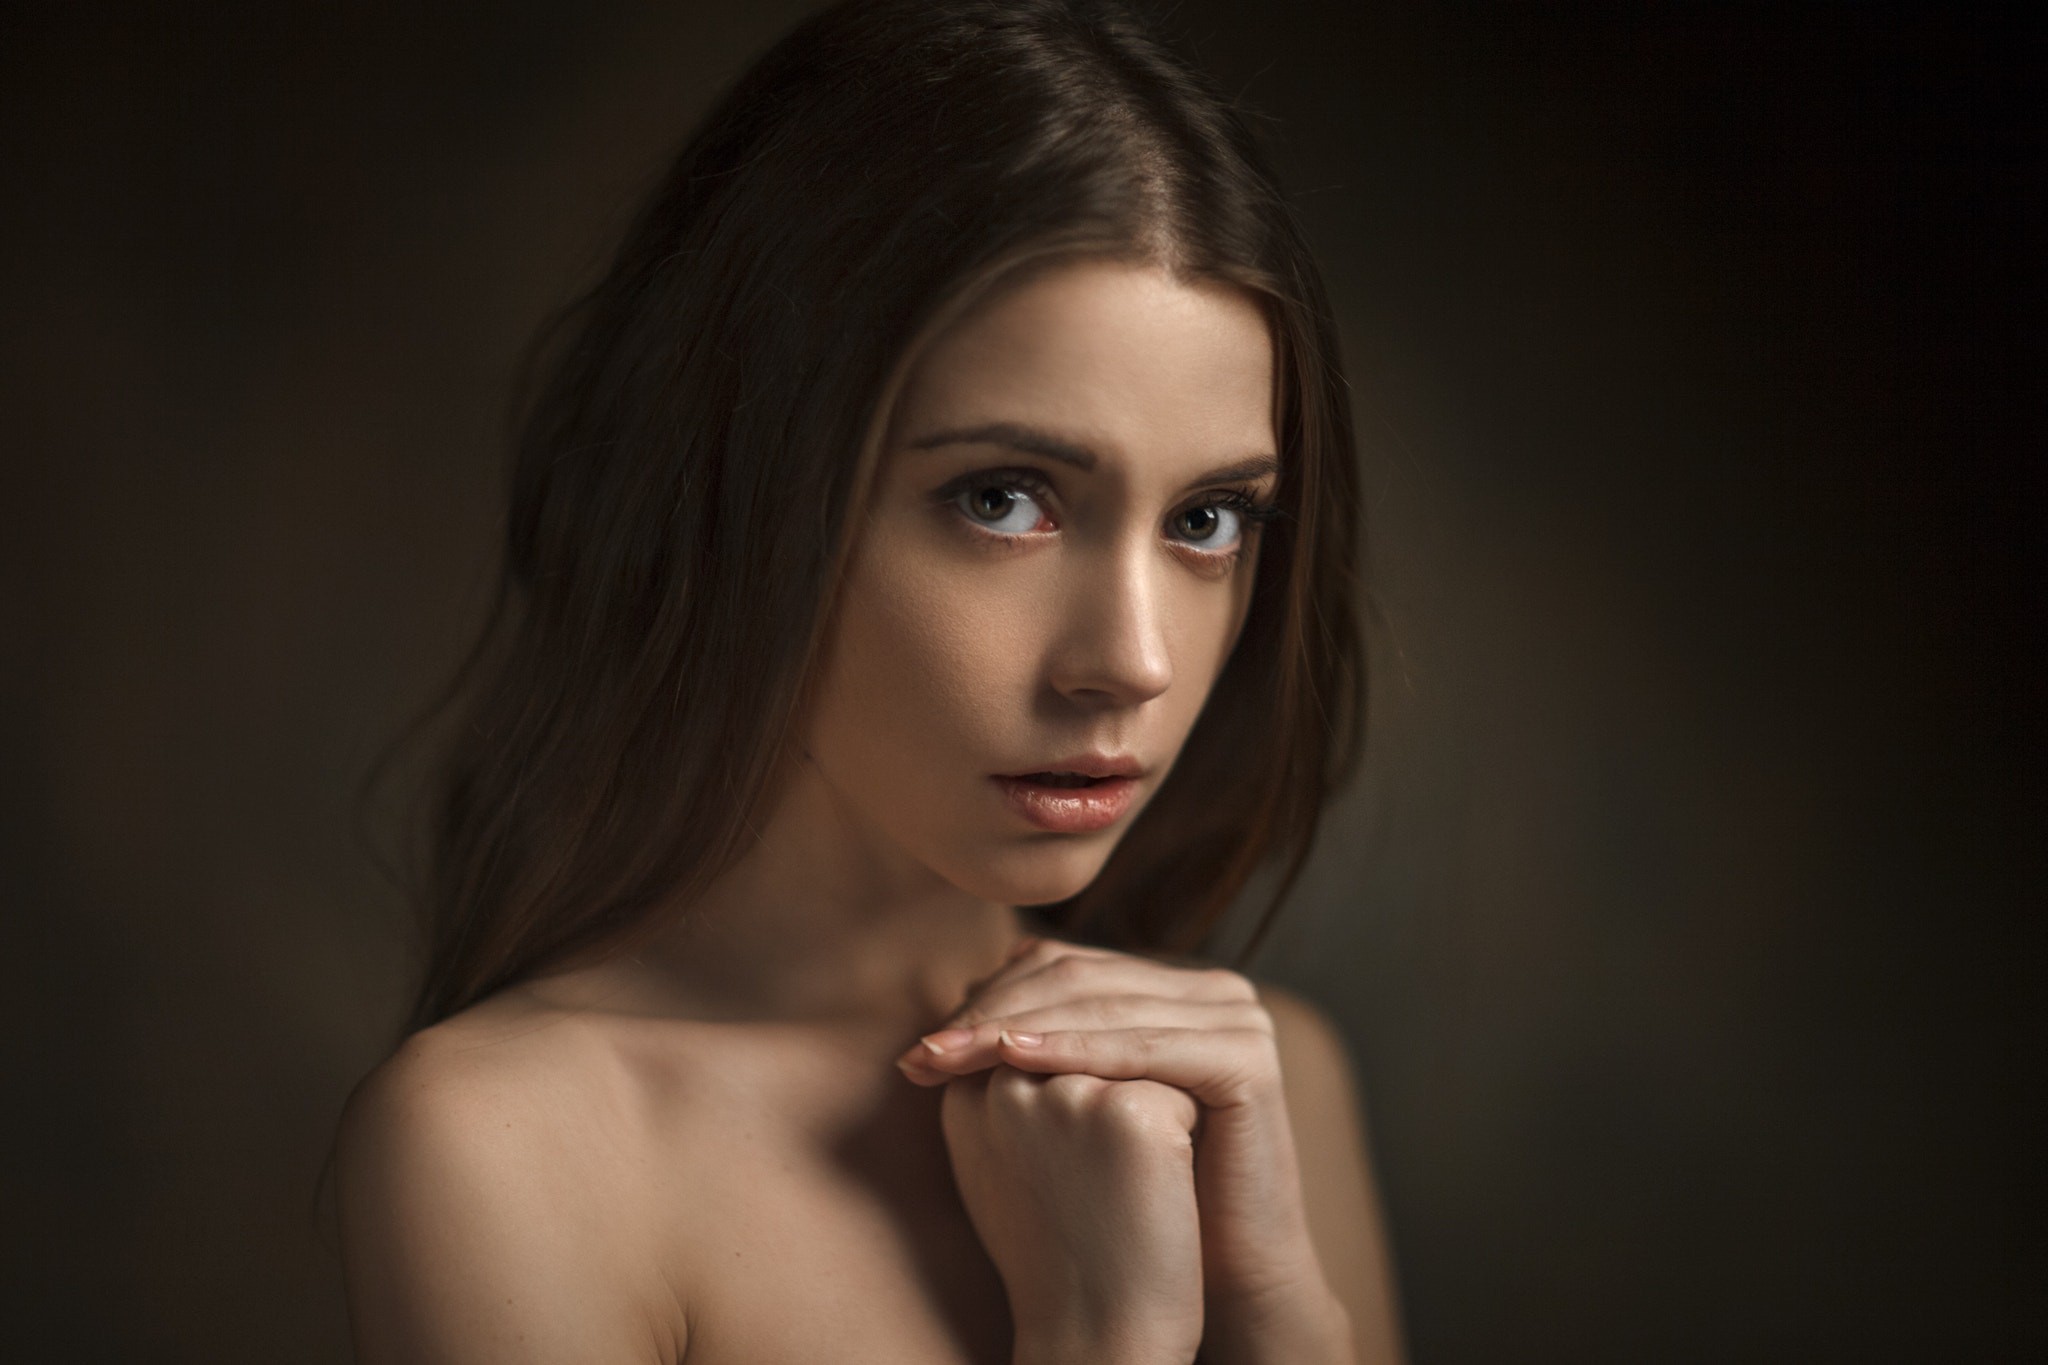 People 2048x1365 women face portrait simple background Ksenia Kokoreva implied nude bare shoulders